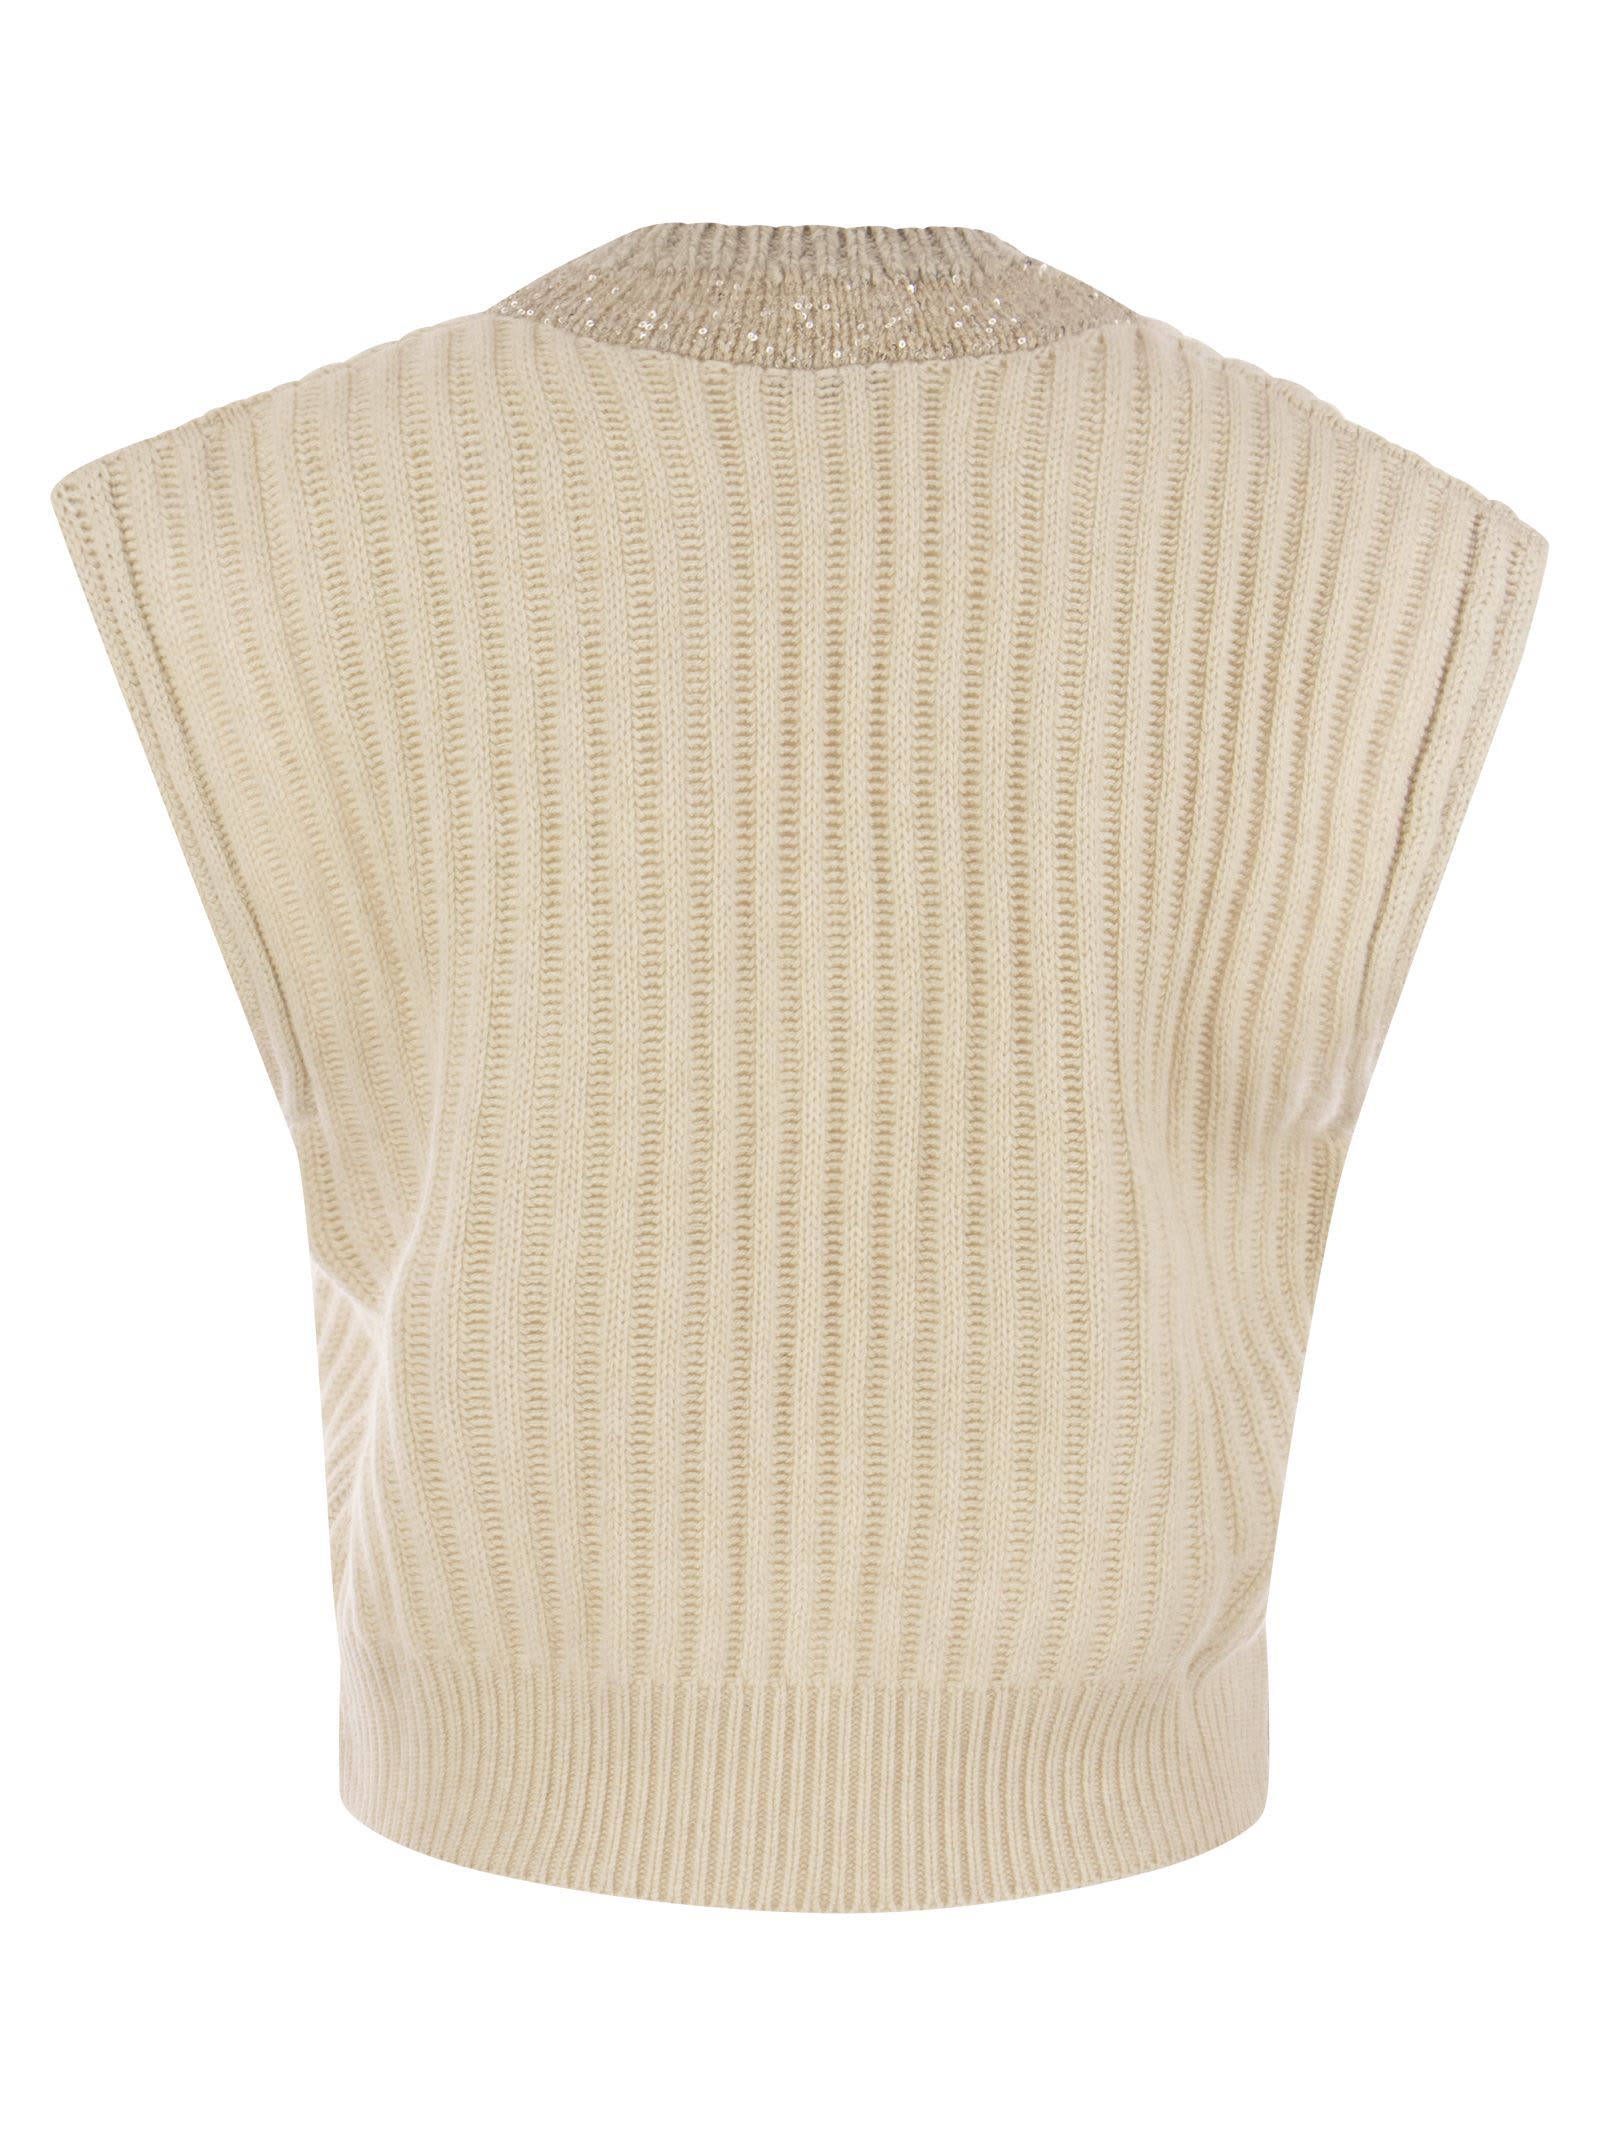 NWT $3499 Brunello Cucinelli Women 100% Cashmere Stripe Knit patch